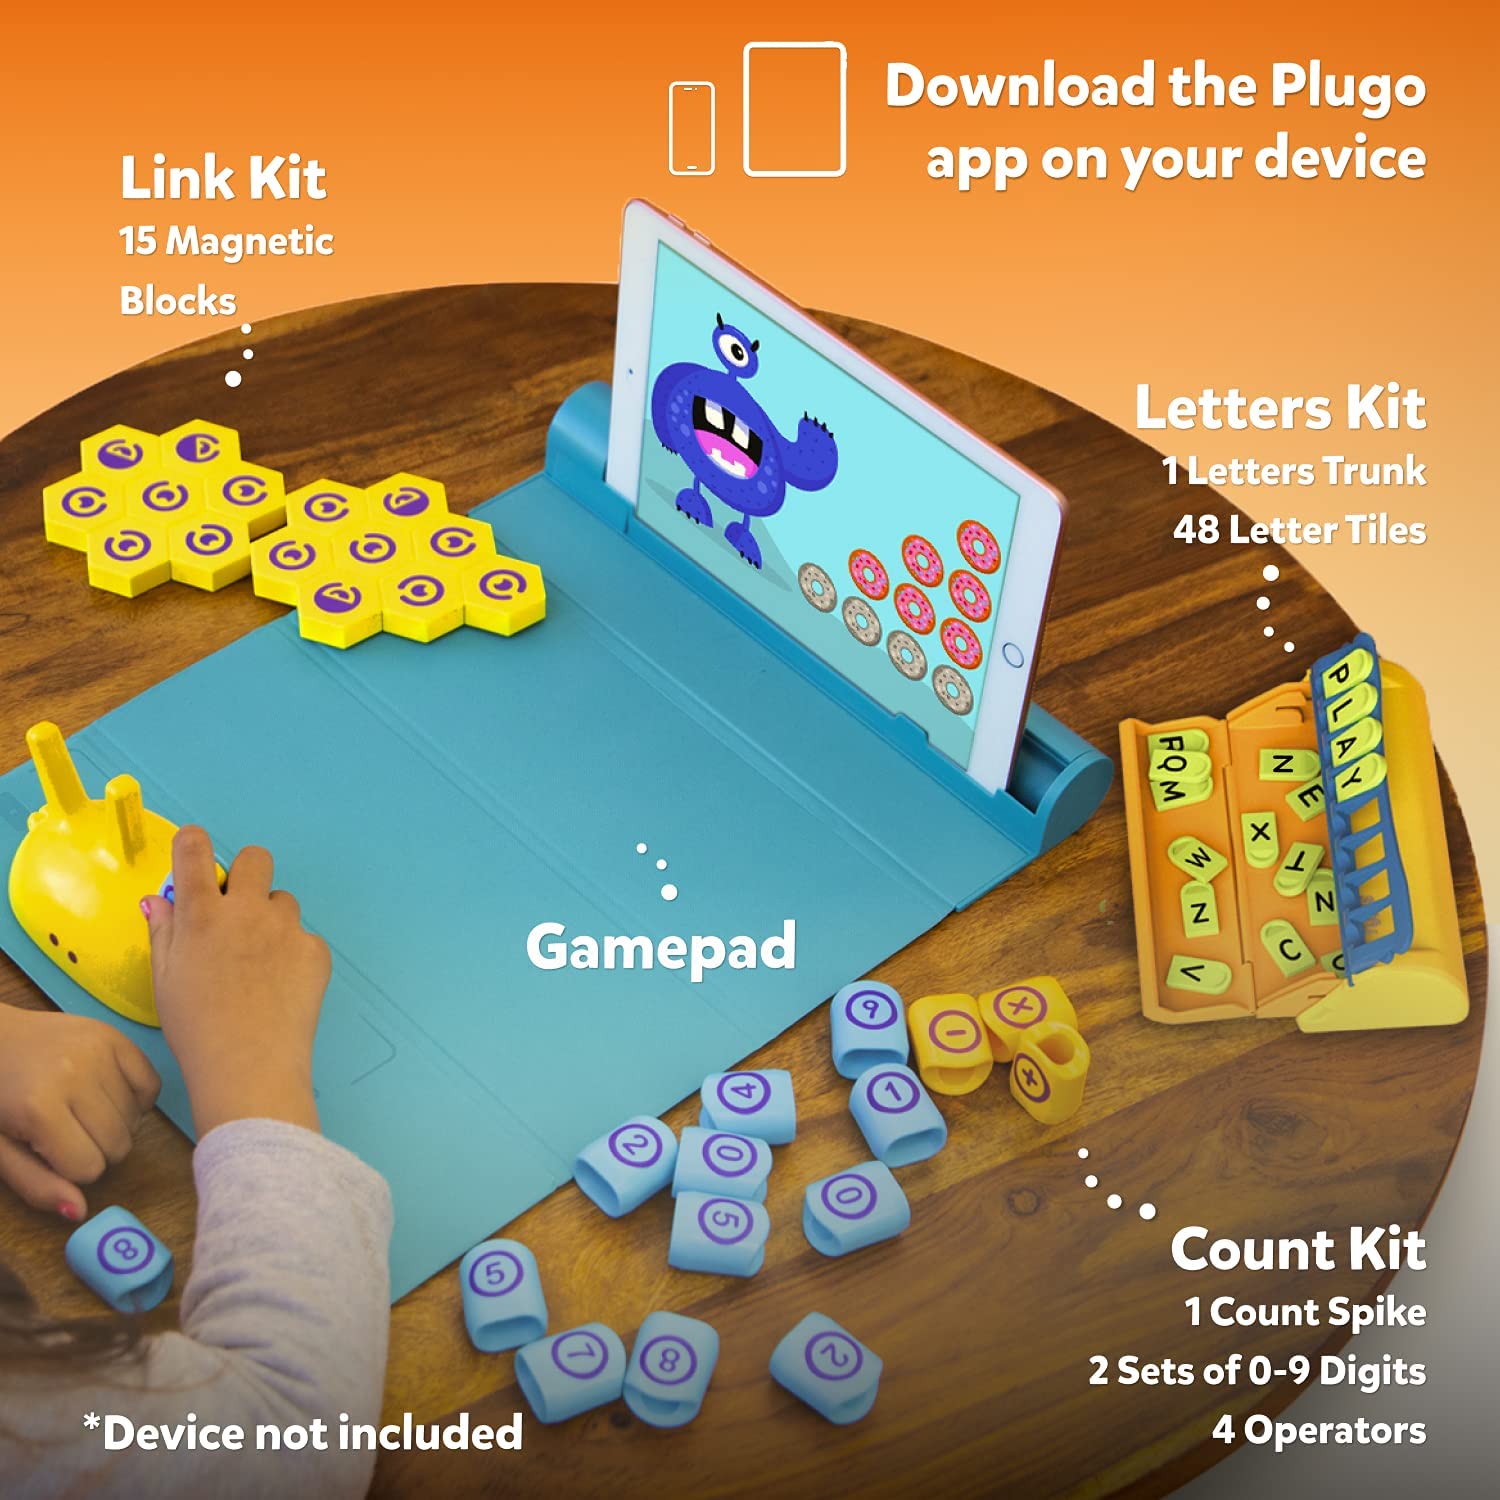 PlayShifu Interactive STEM Toys - Plugo Link (Kit + App) | Educational Toy  for Kids 4-10 Years | Brain Games | Magnetic Building Blocks + 200 STEM